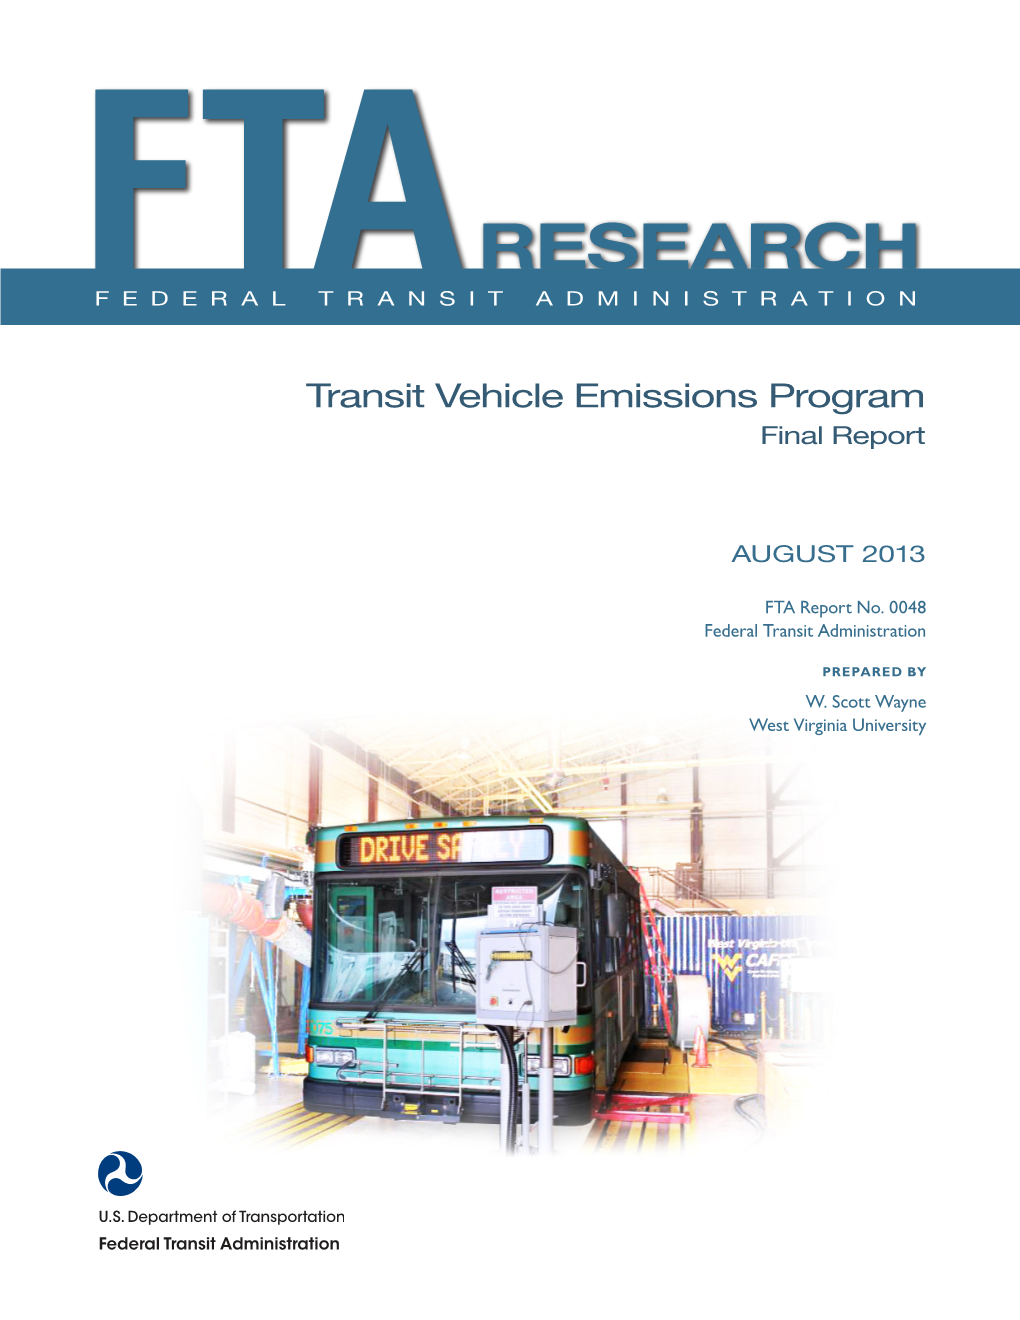 Transit Vehicle Emissions Program Final Report